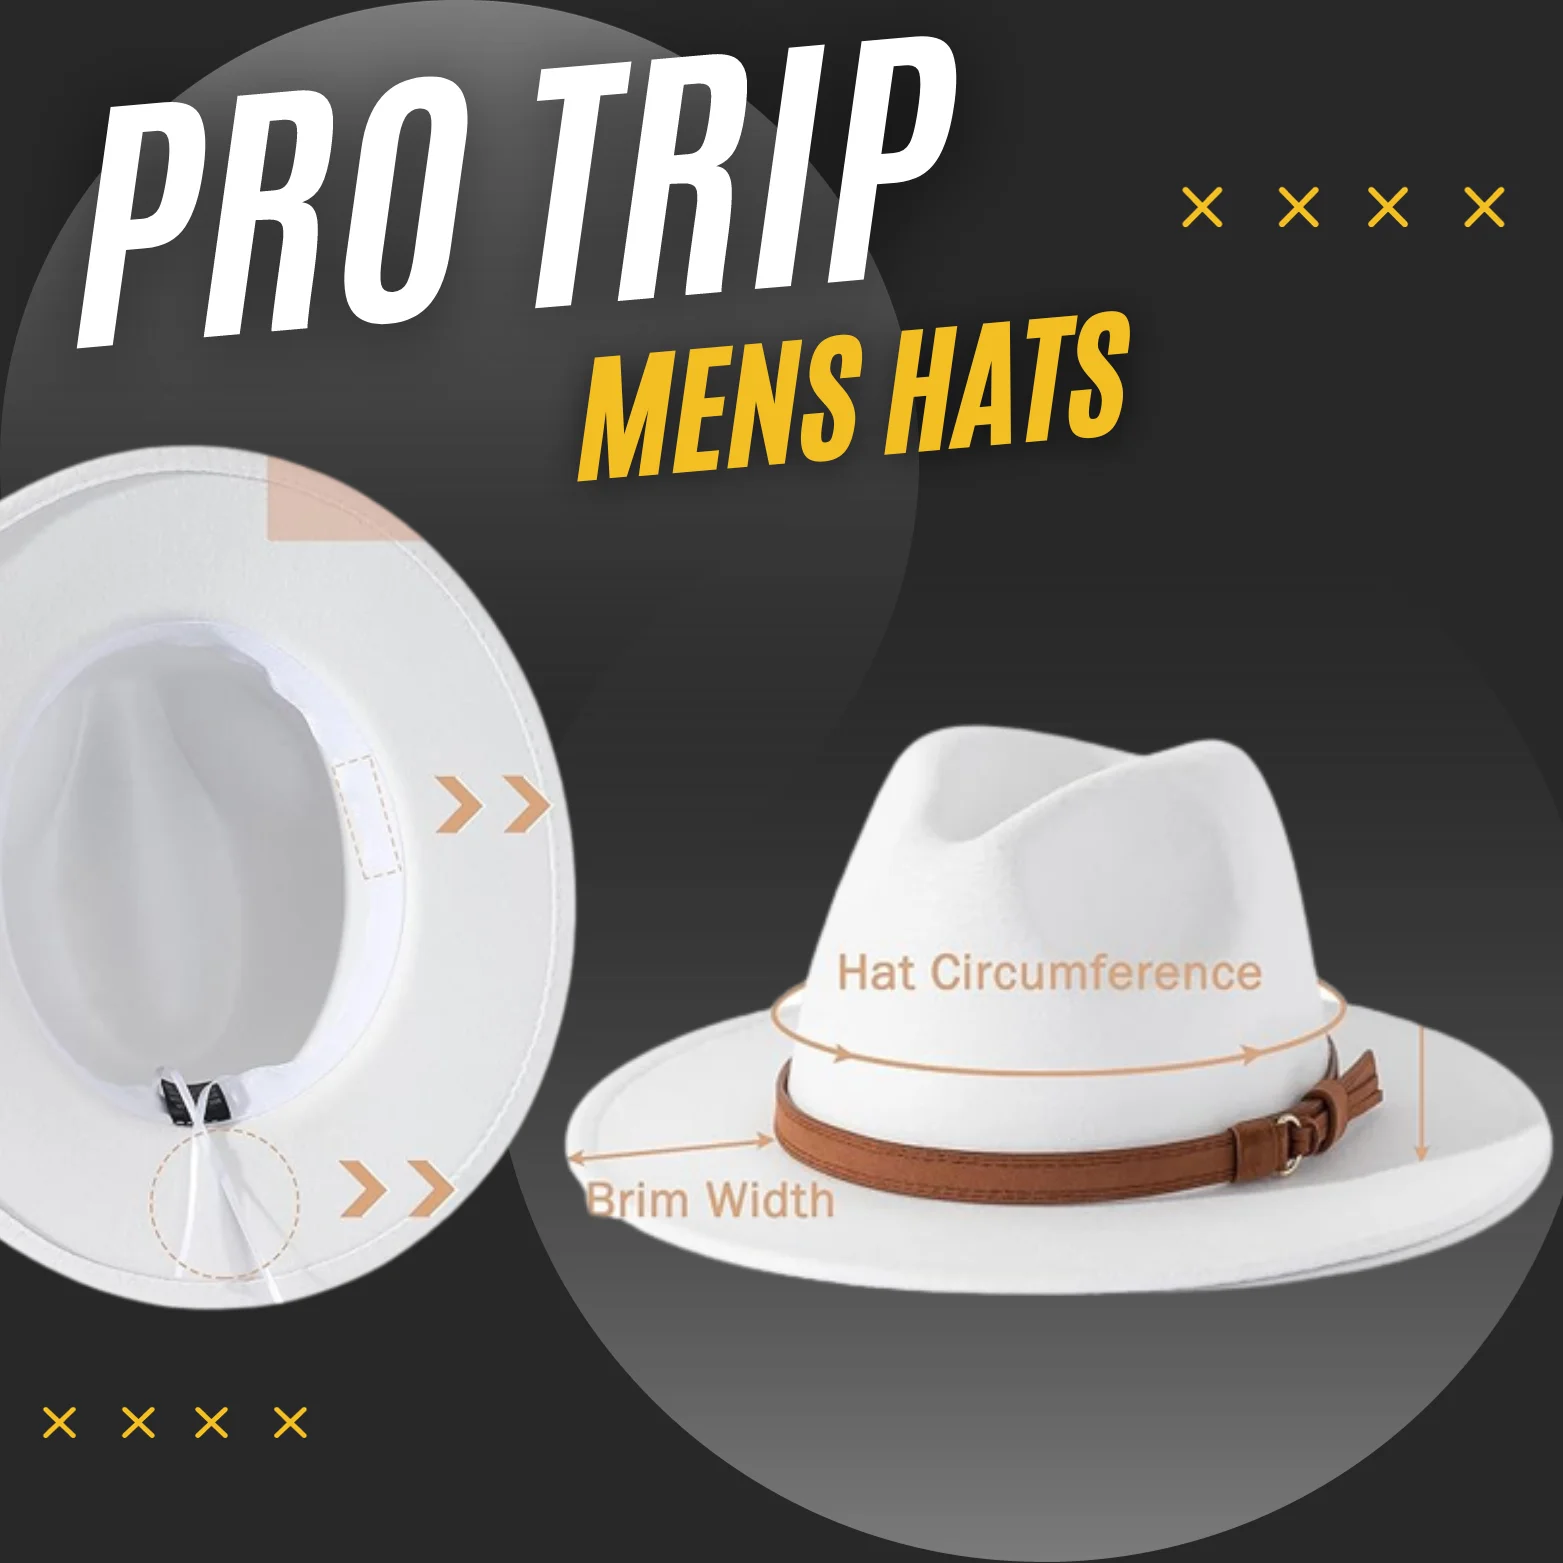 Kentucky Derby Hats for Men